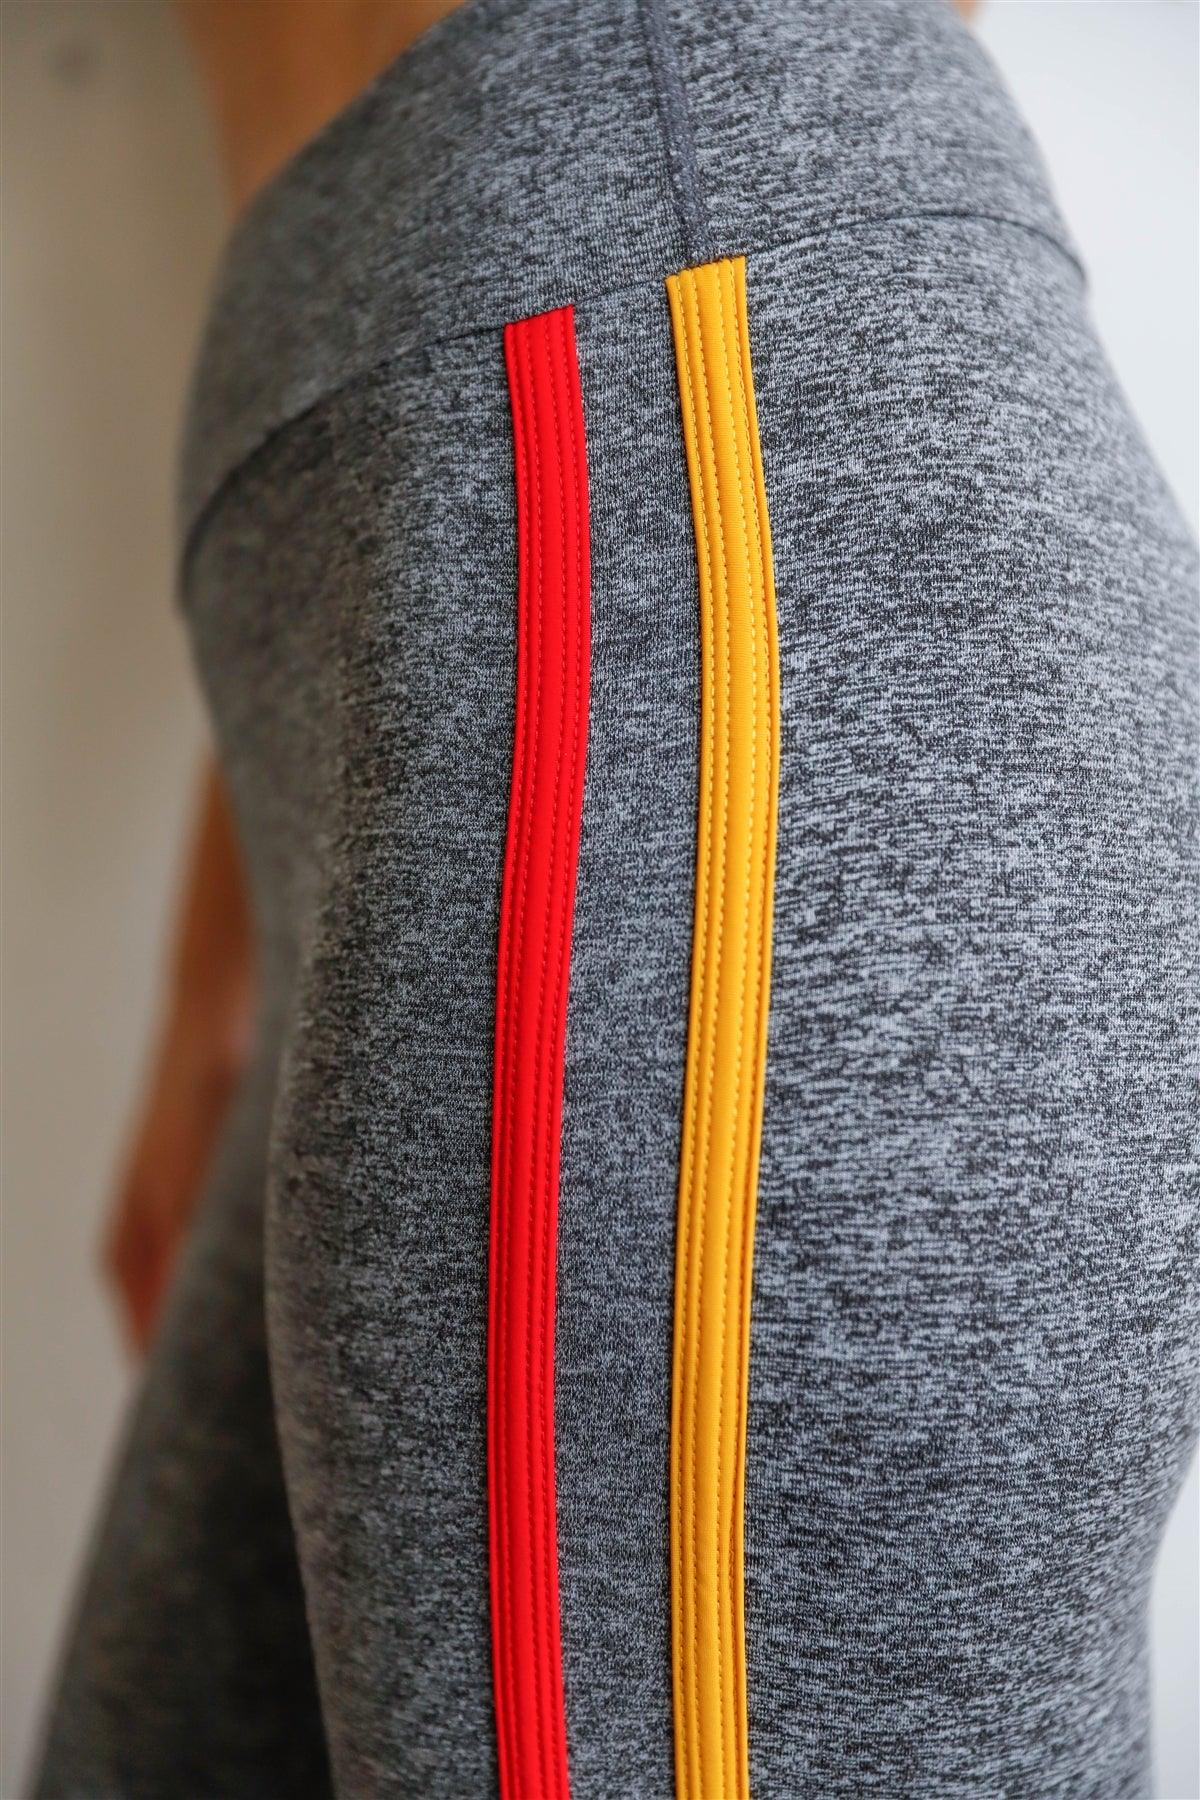 Heather Grey Red & Yellow Stripe Detail Sports Legging Pants /3-1-1-1